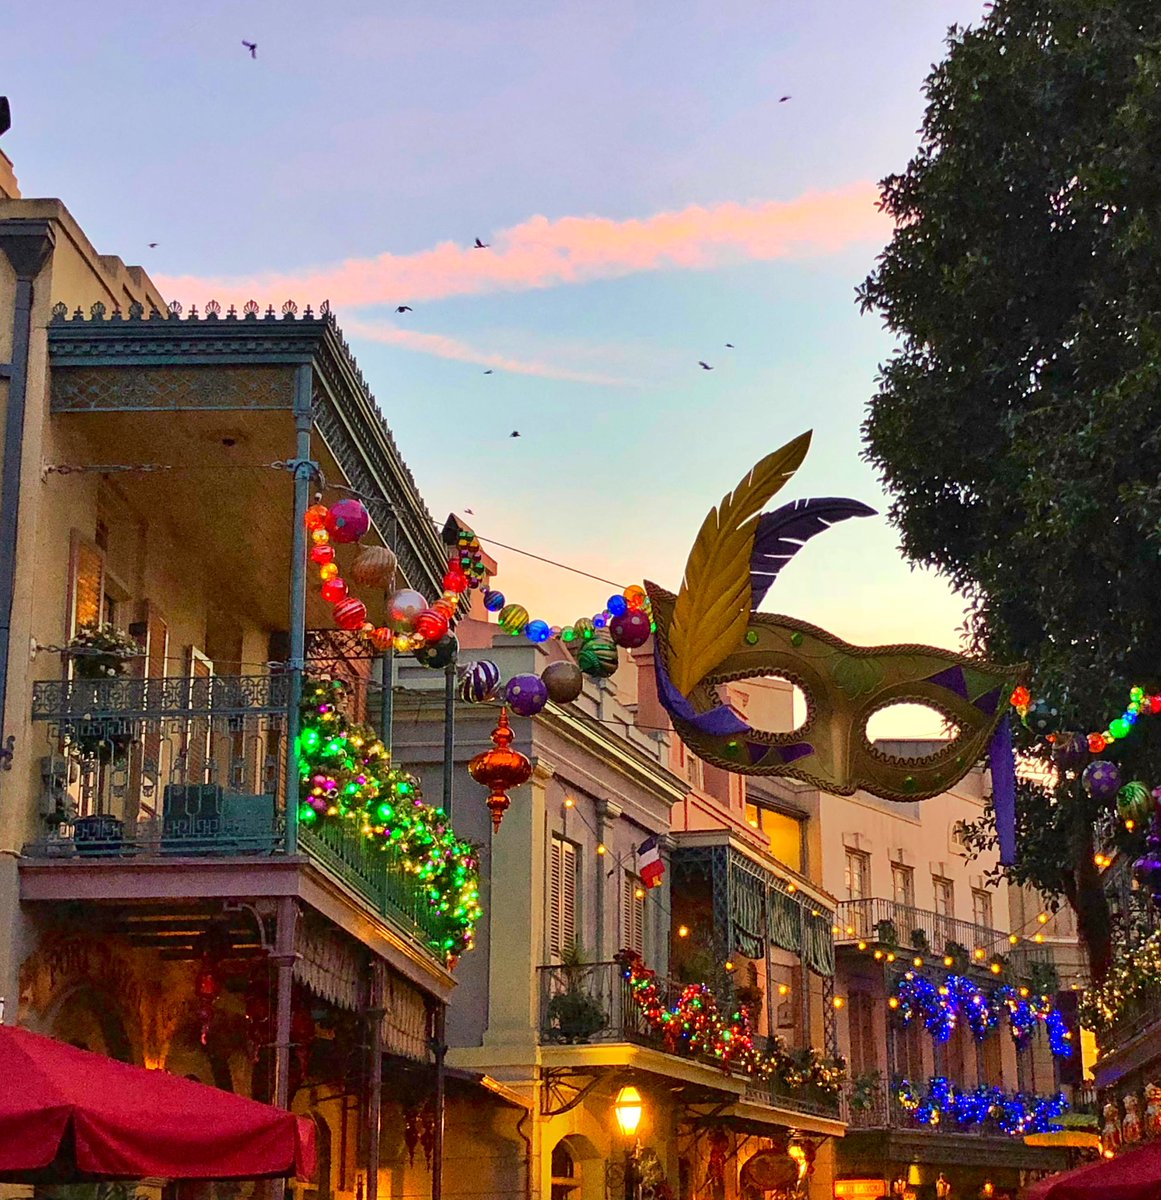 It’s Mardi Gras everyday at Disneyland’s beautiful New Orleans Square! 🎉🎺🎶

#Disneyland 💖✨✨ #FatTuesday